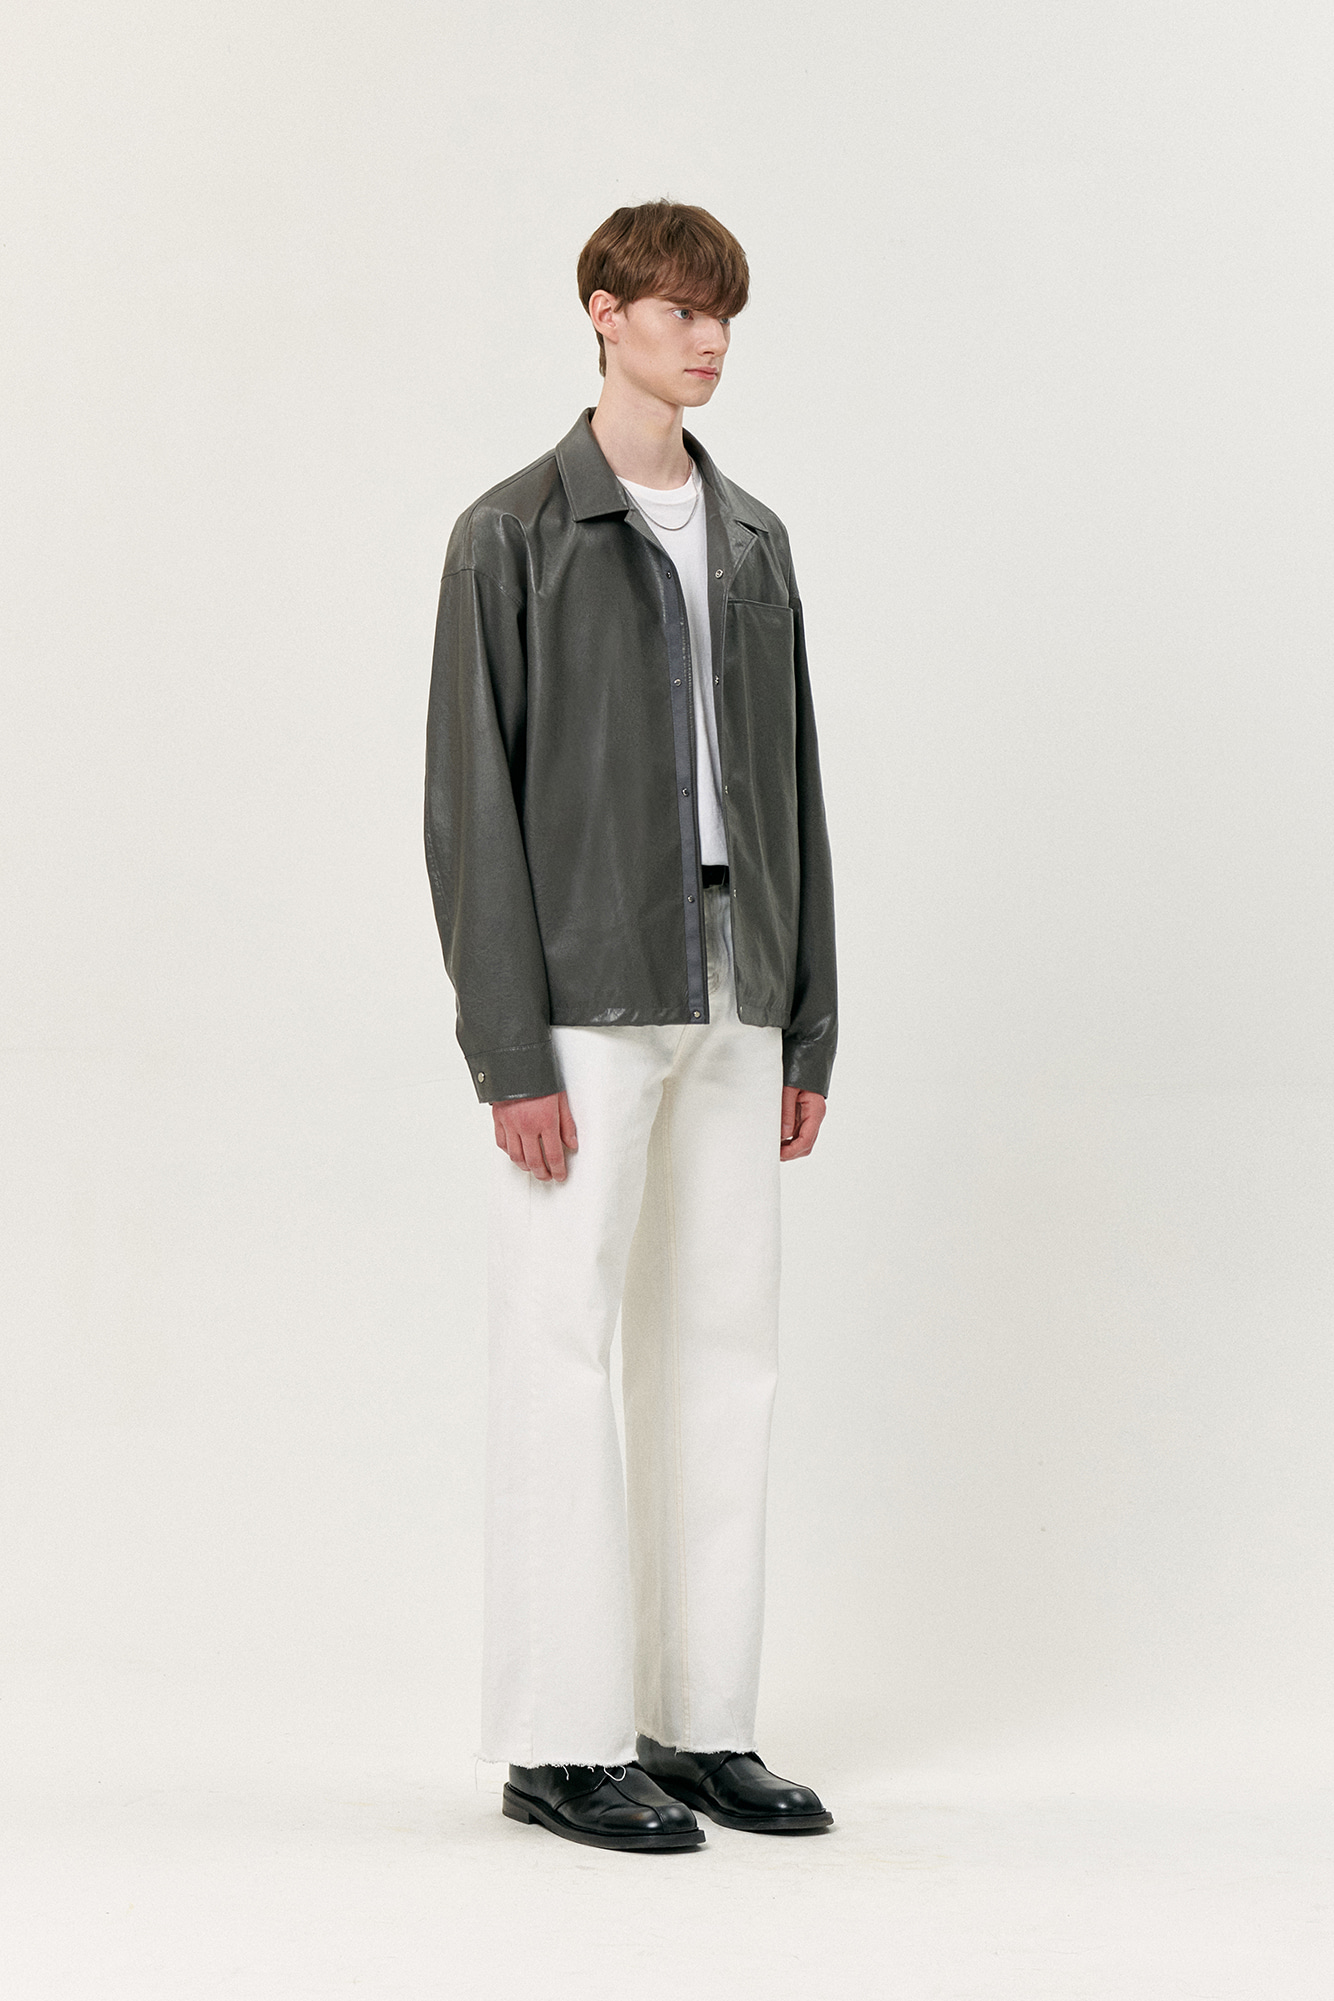 Overfit vegan leather shirt jacket (light gray)